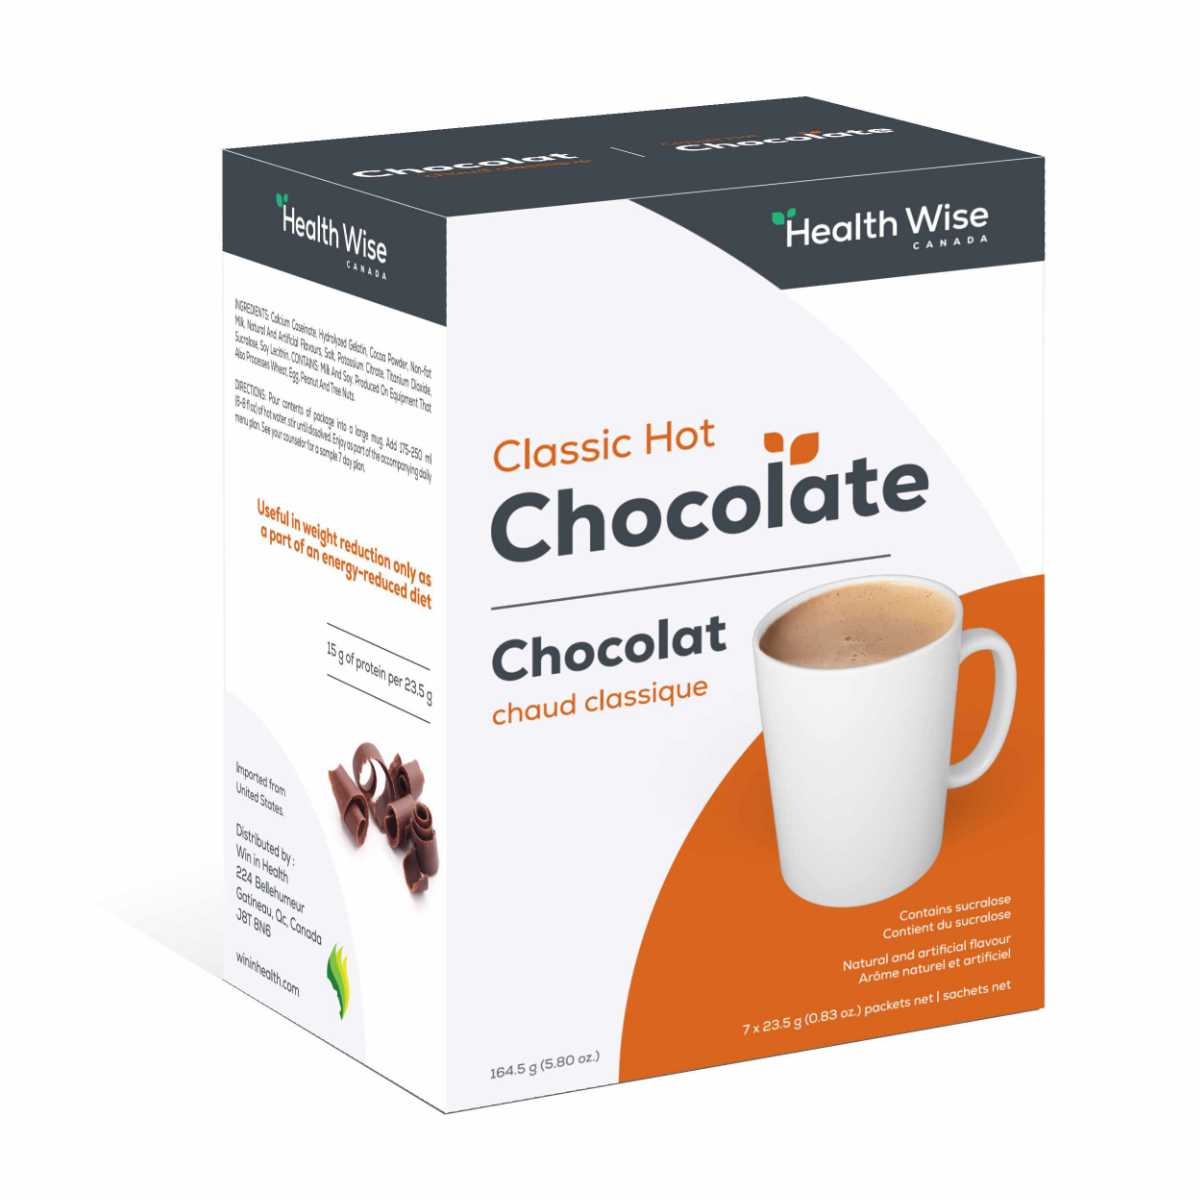 Healthwise - classic hot chocolate